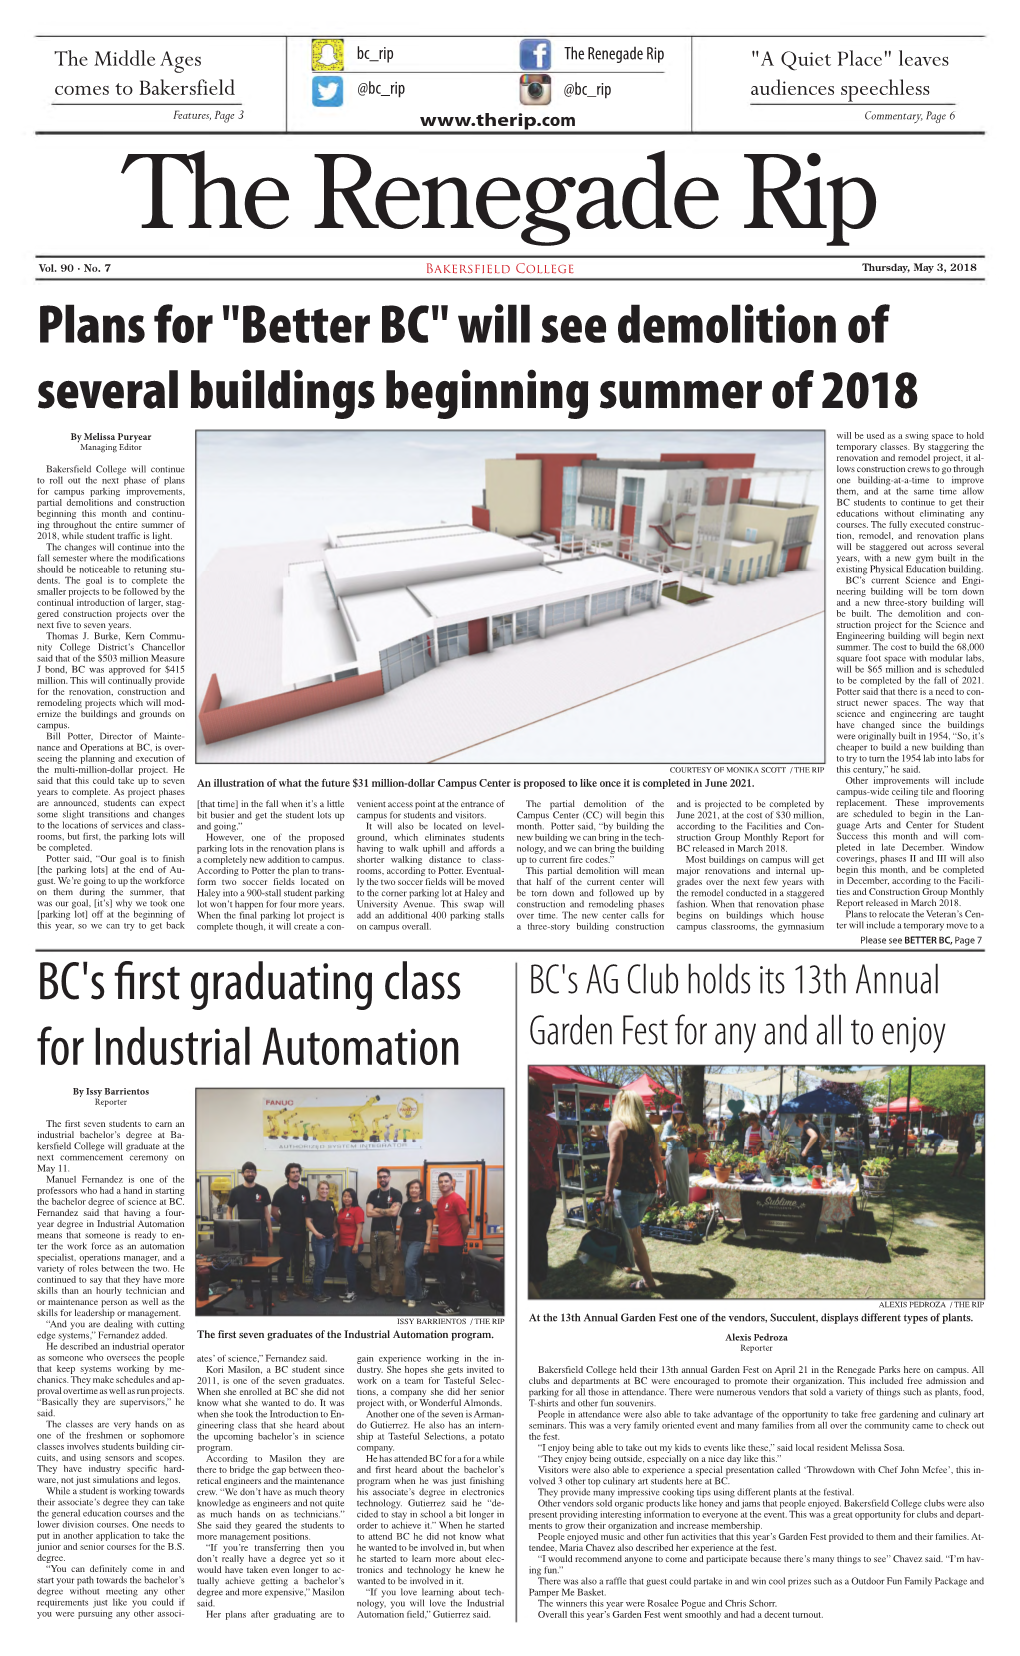 "Better BC" Will See Demolition of Several Buildings Beginning Summer of 2018